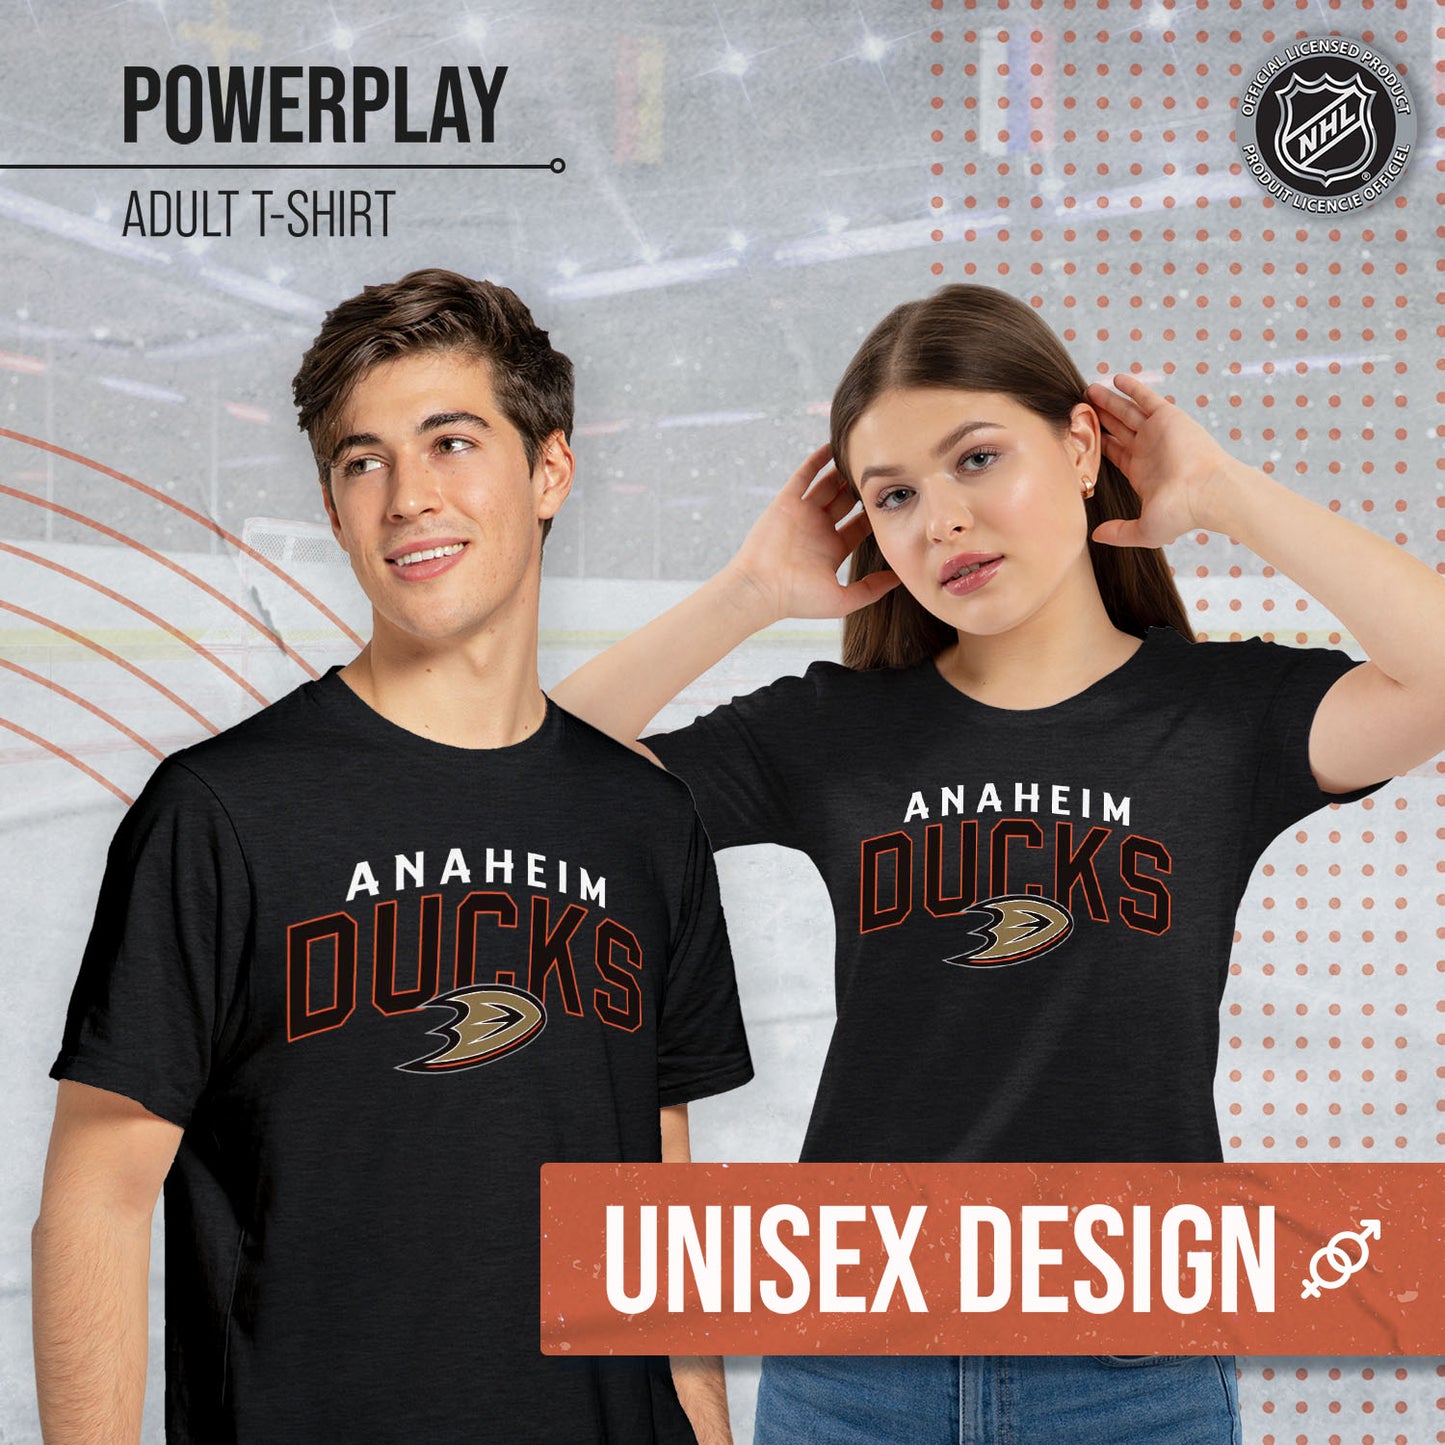 Anaheim Ducks NHL Adult Powerplay Heathered Unisex T-Shirt - Black Heather